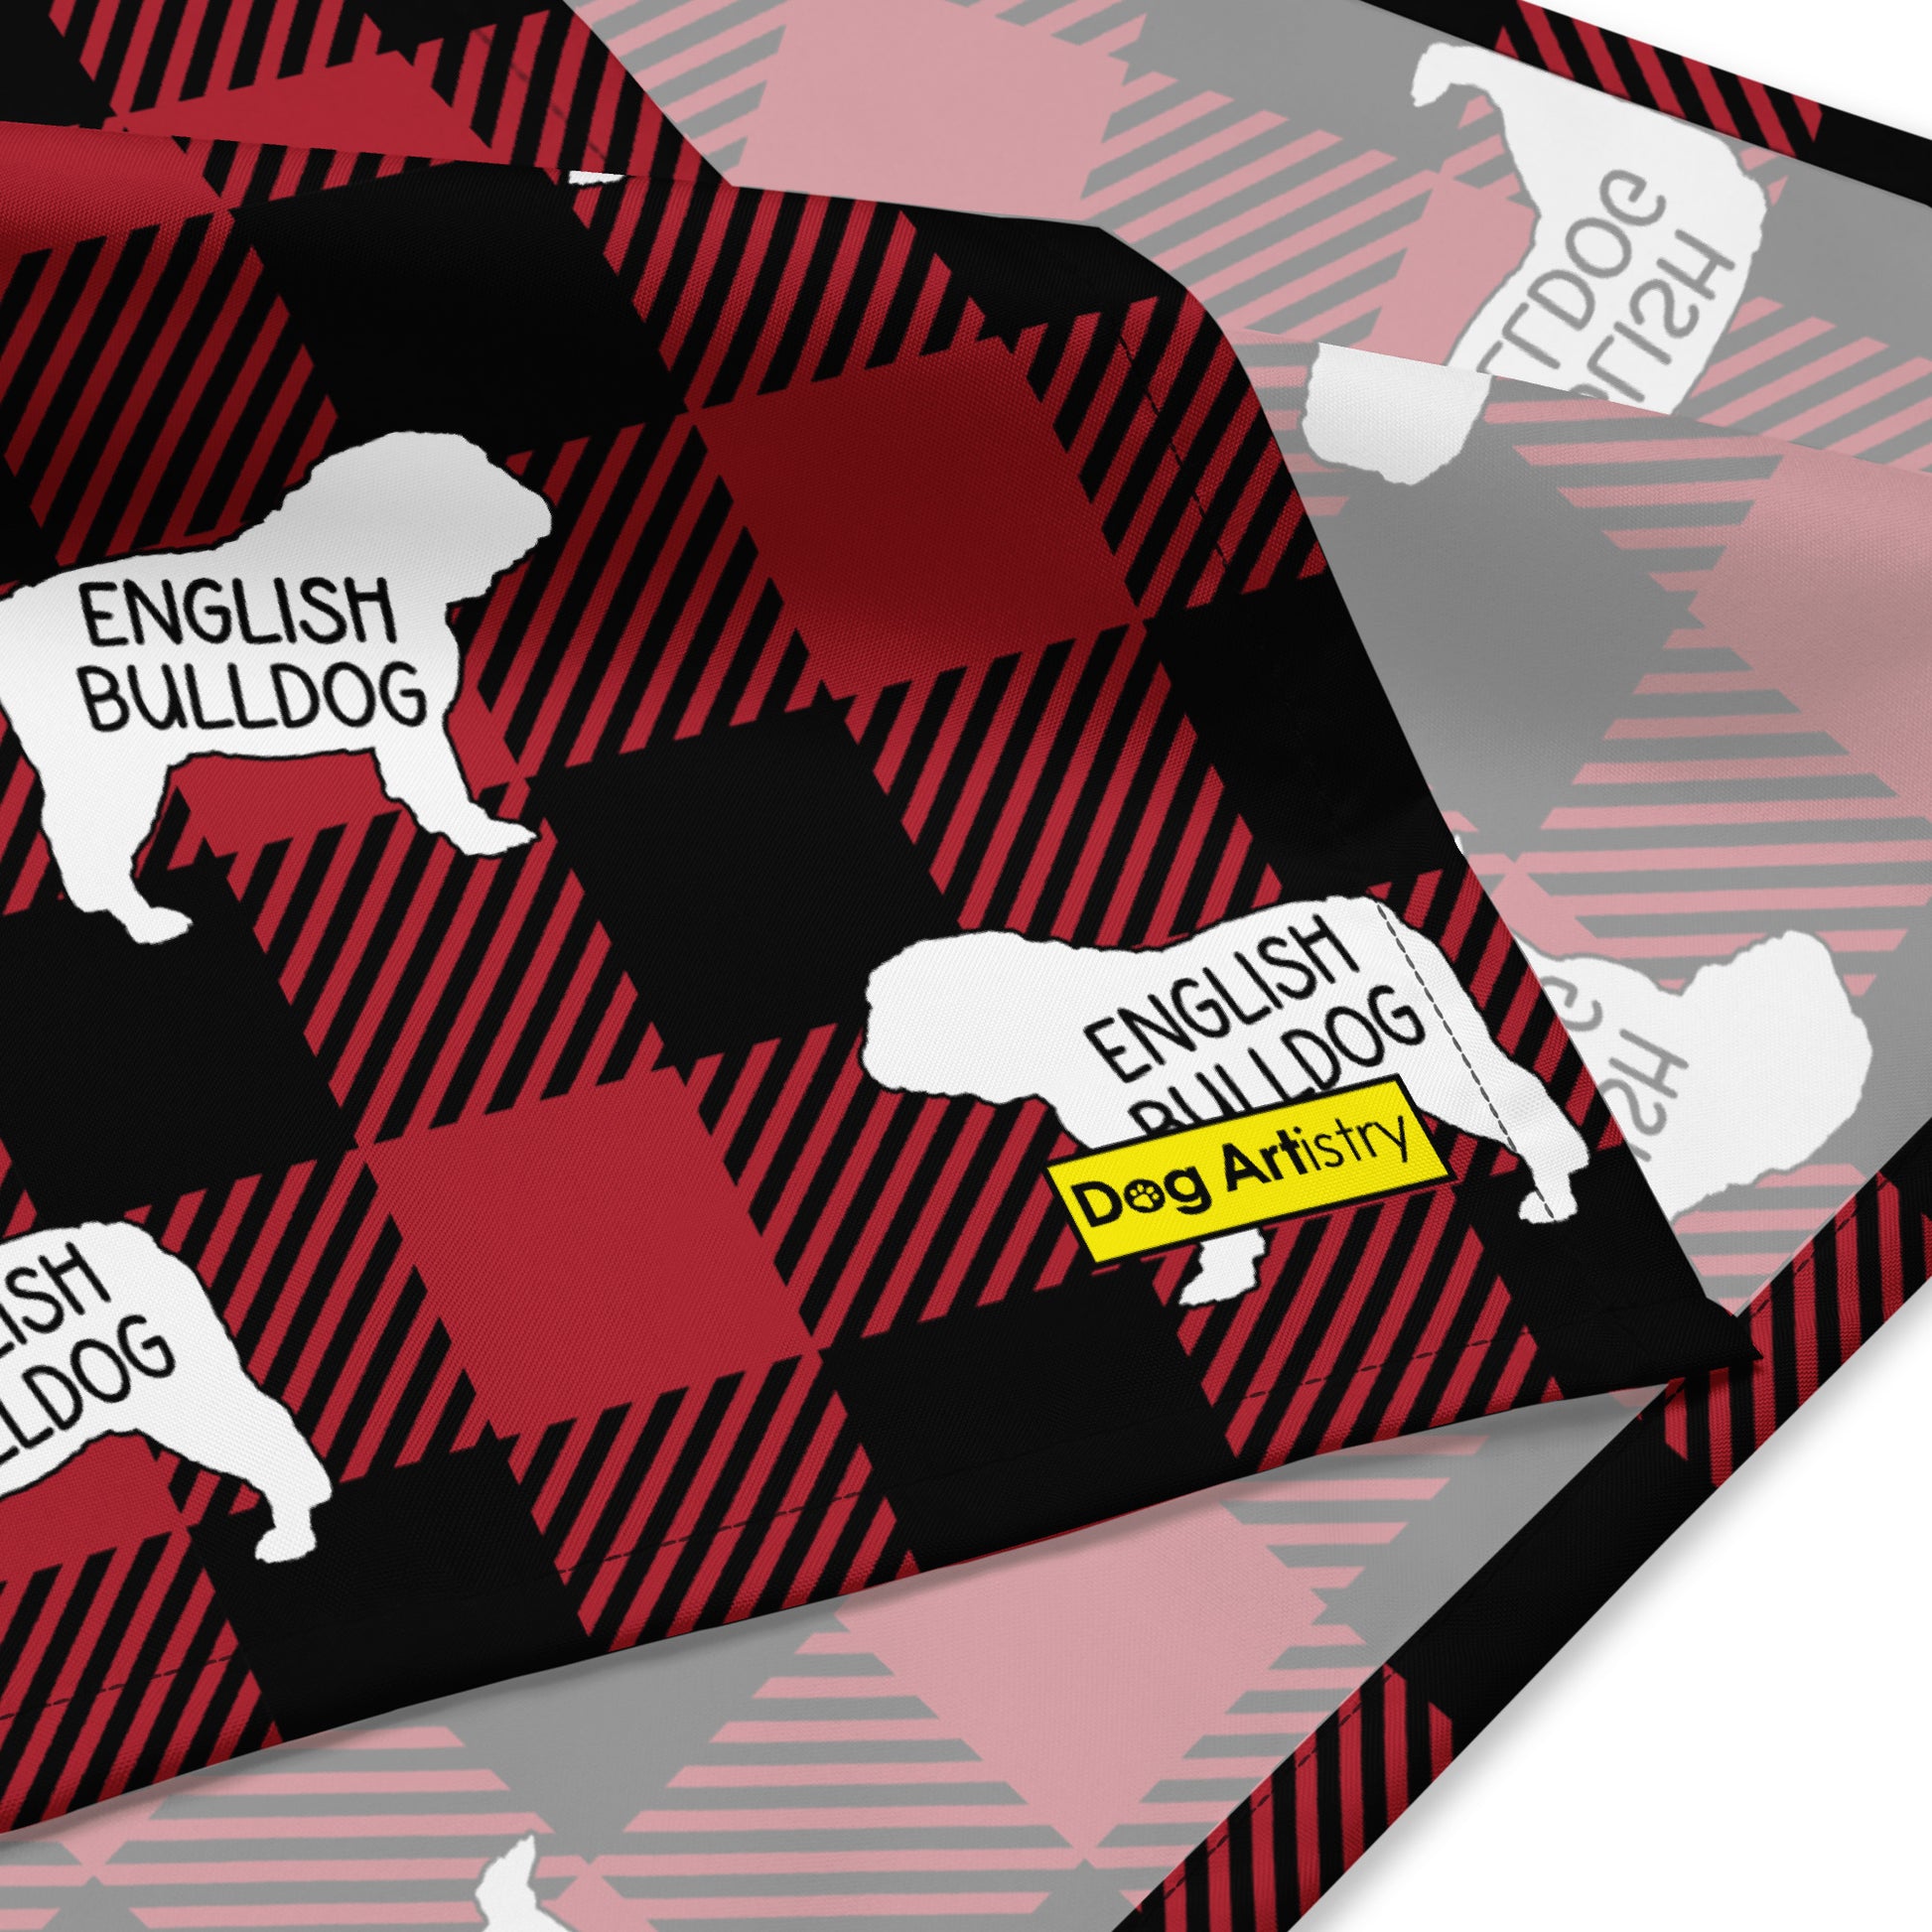 English Bulldog dark red plaid bandana by Dog Artistry. Close up.